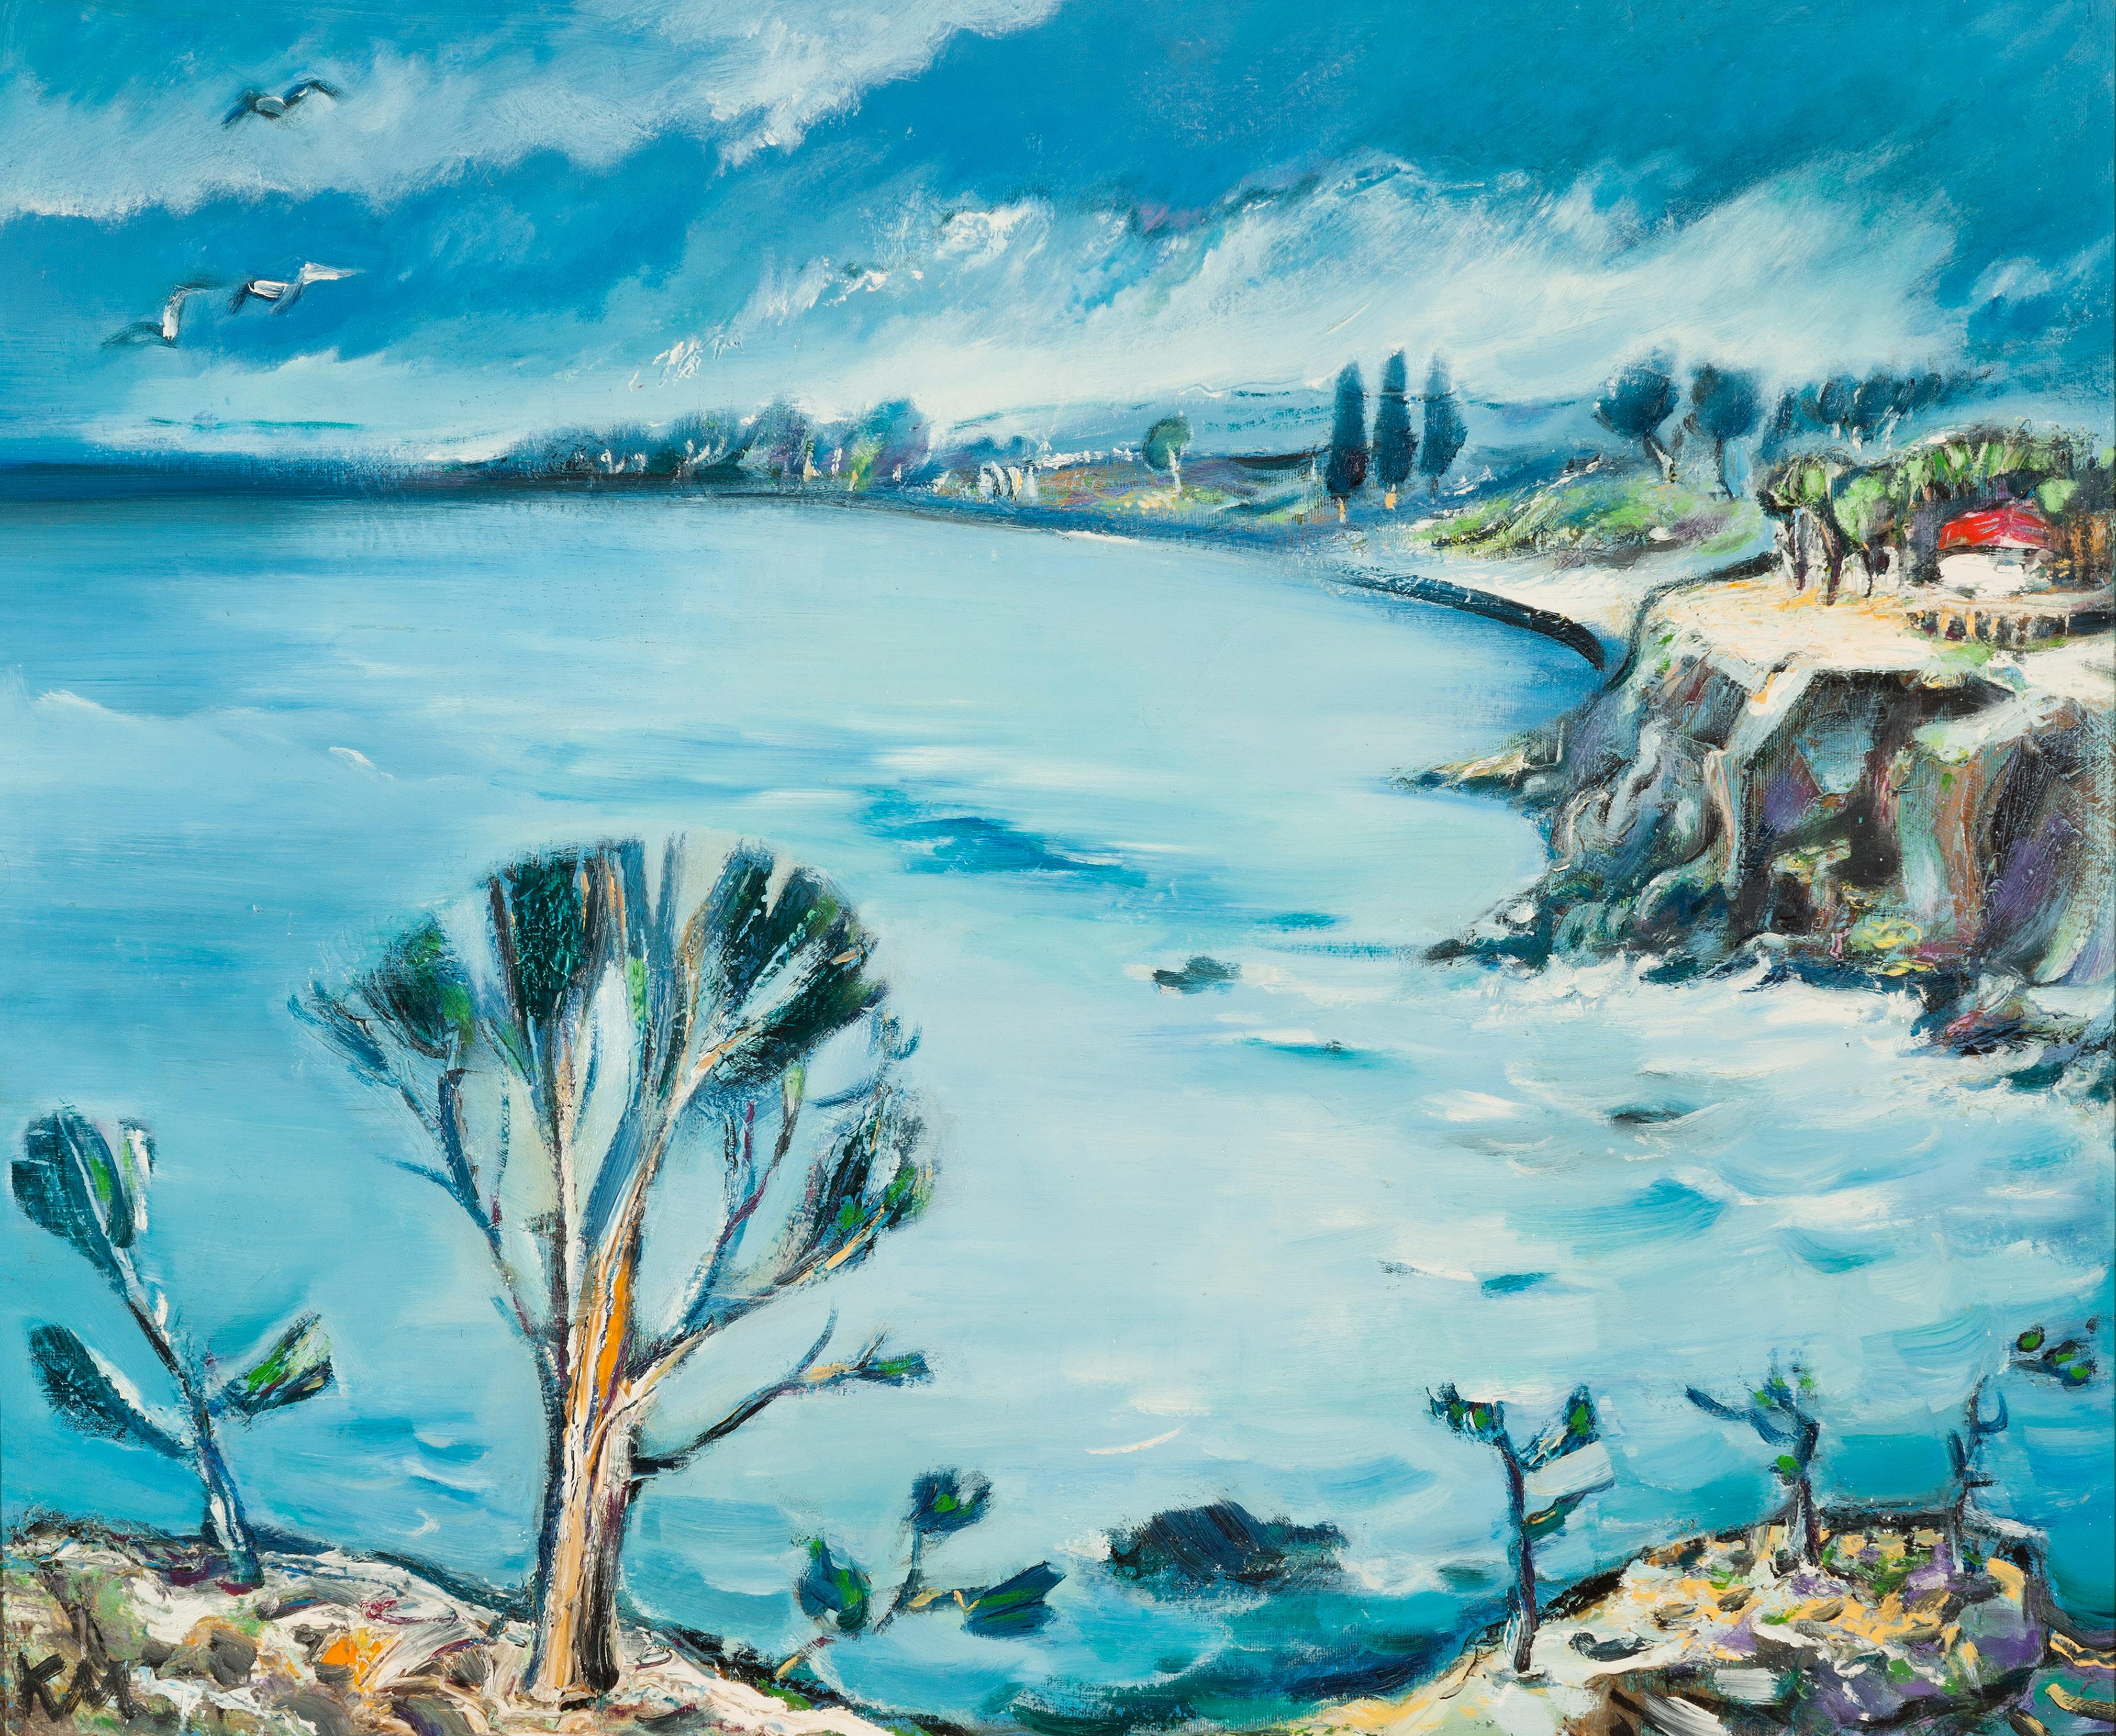 Krasimira Mihailova Landscape Painting - Seascape - Landscape - Oil Painting Colors Blue White Green Red